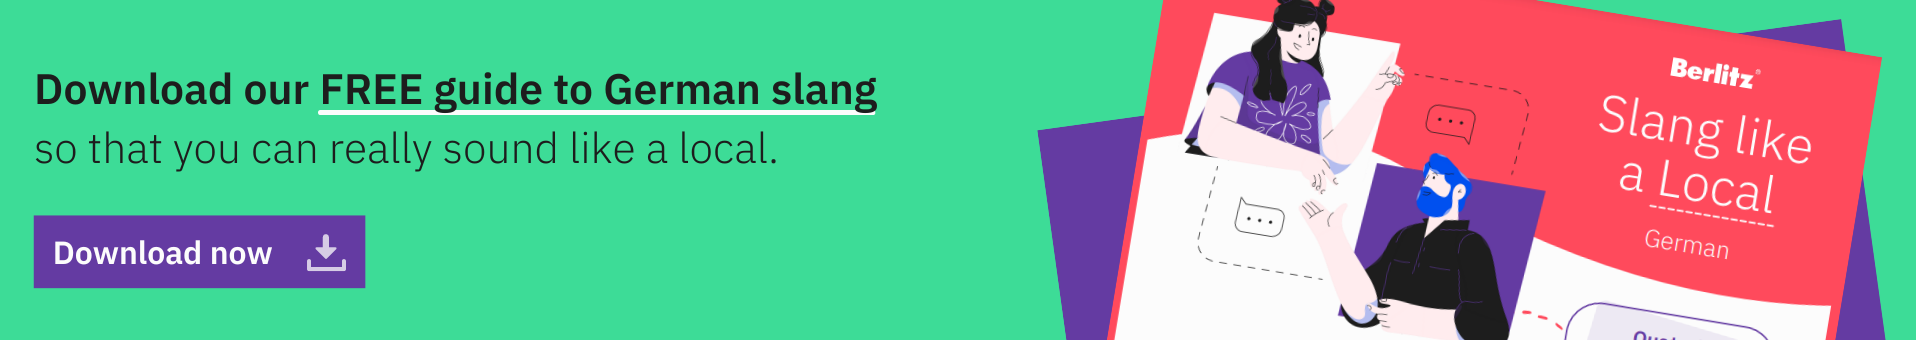 Free guide to German slang.